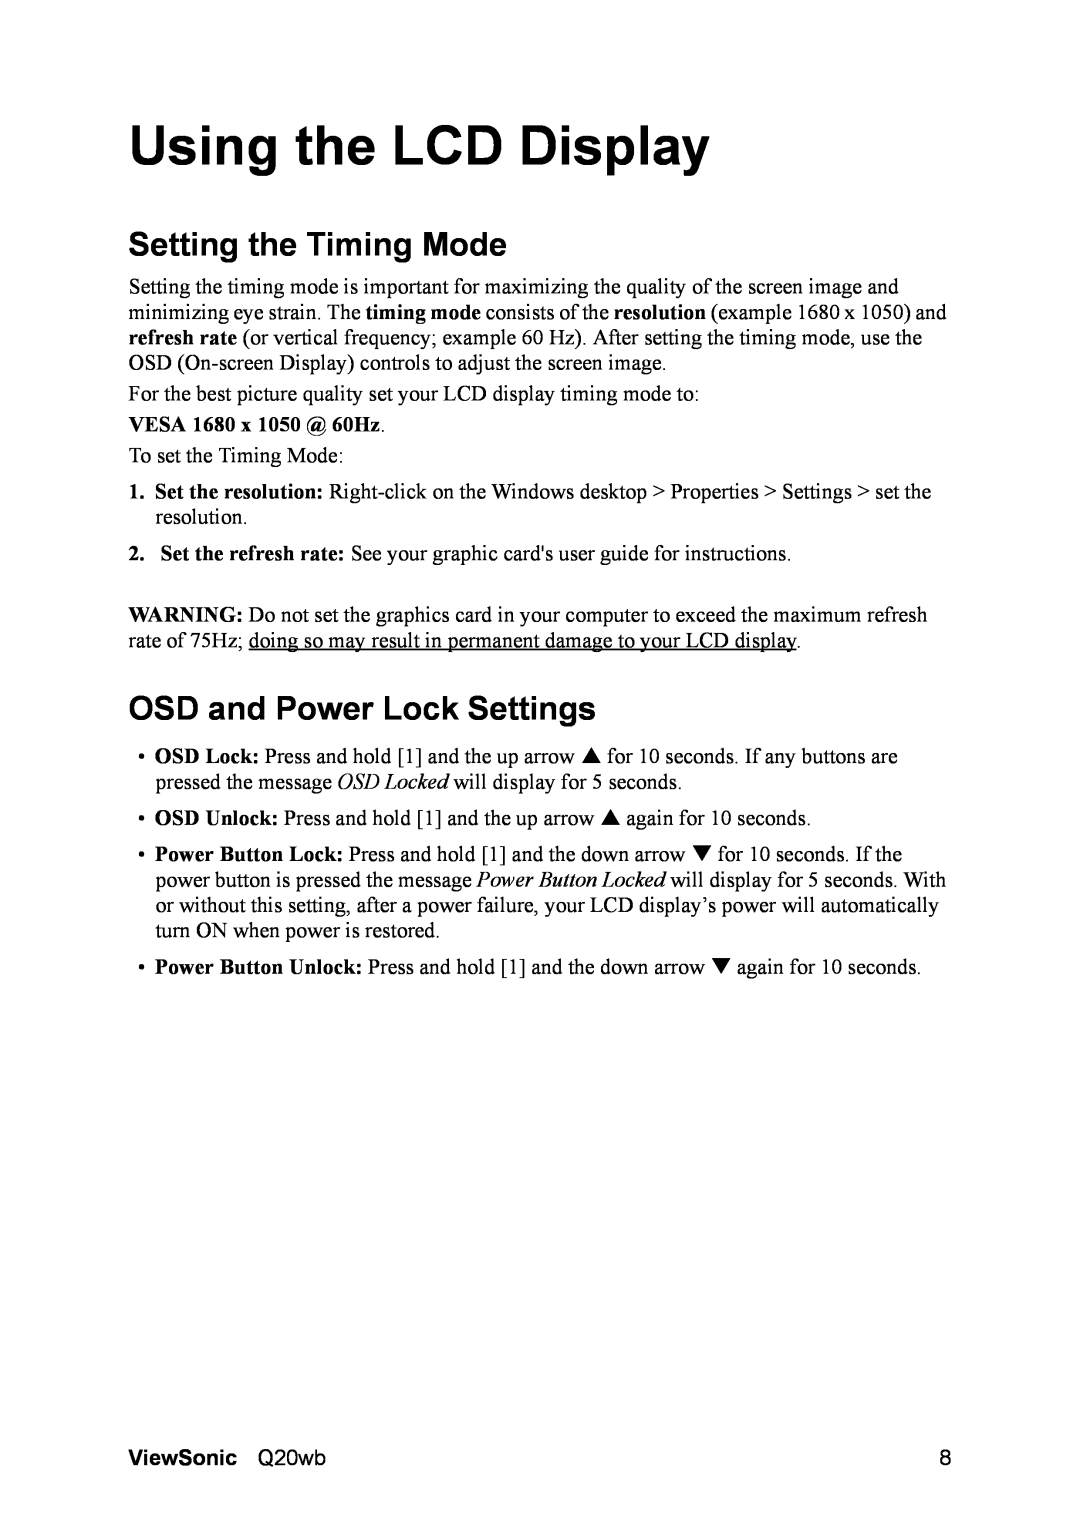 ViewSonic Q20WB manual Using the LCD Display, Setting the Timing Mode, OSD and Power Lock Settings, VESA 1680 x 1050 @ 60Hz 